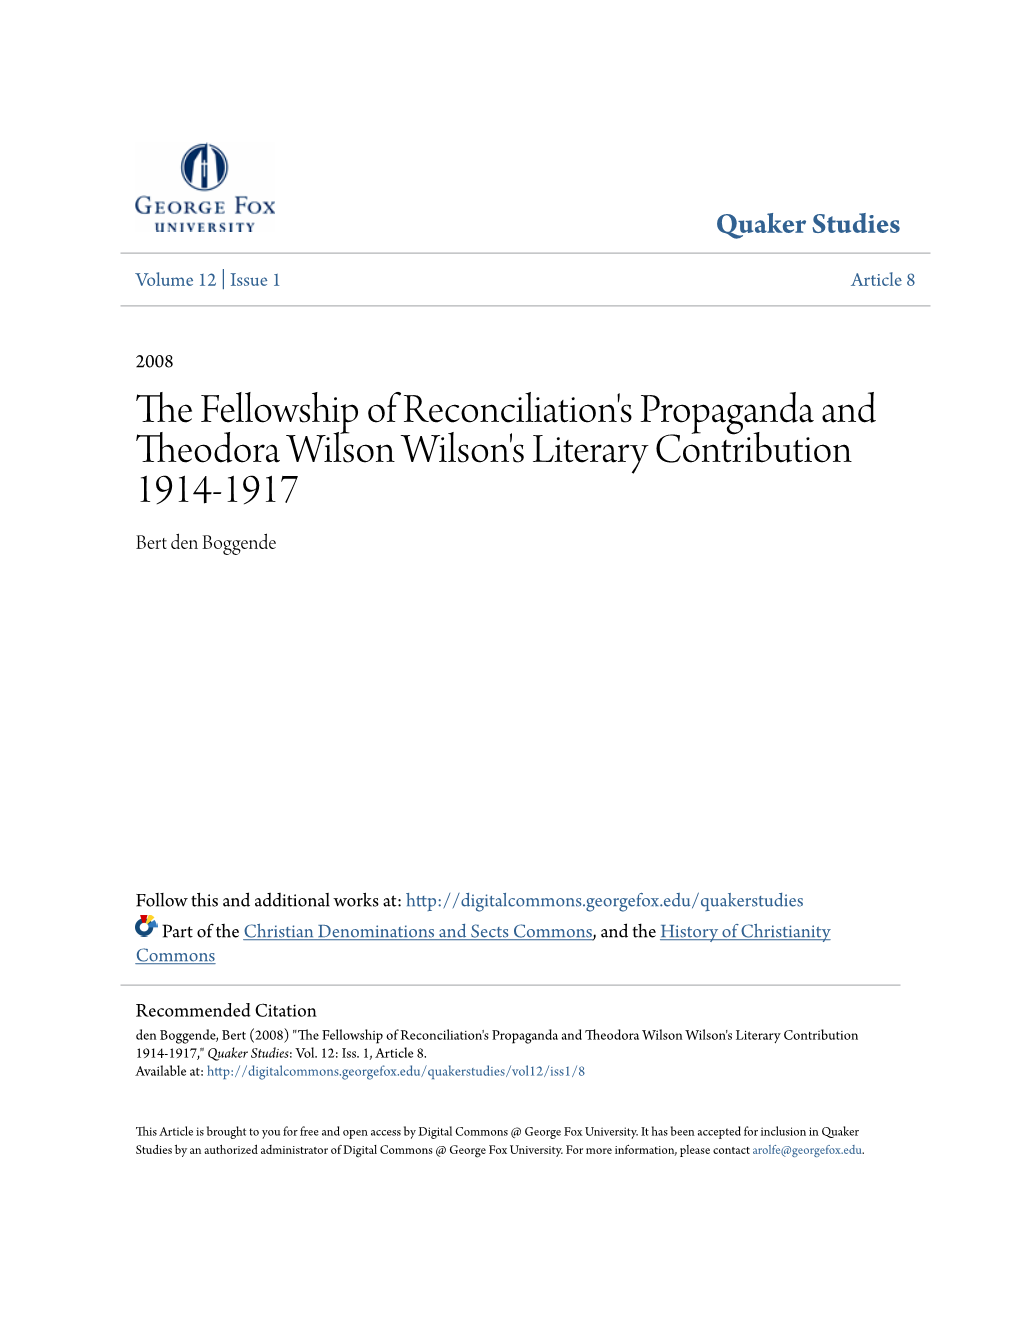 The Fellowship of Reconciliation's Propaganda and Theodora Wilson Wilson's Literary Contribution 1914-1917